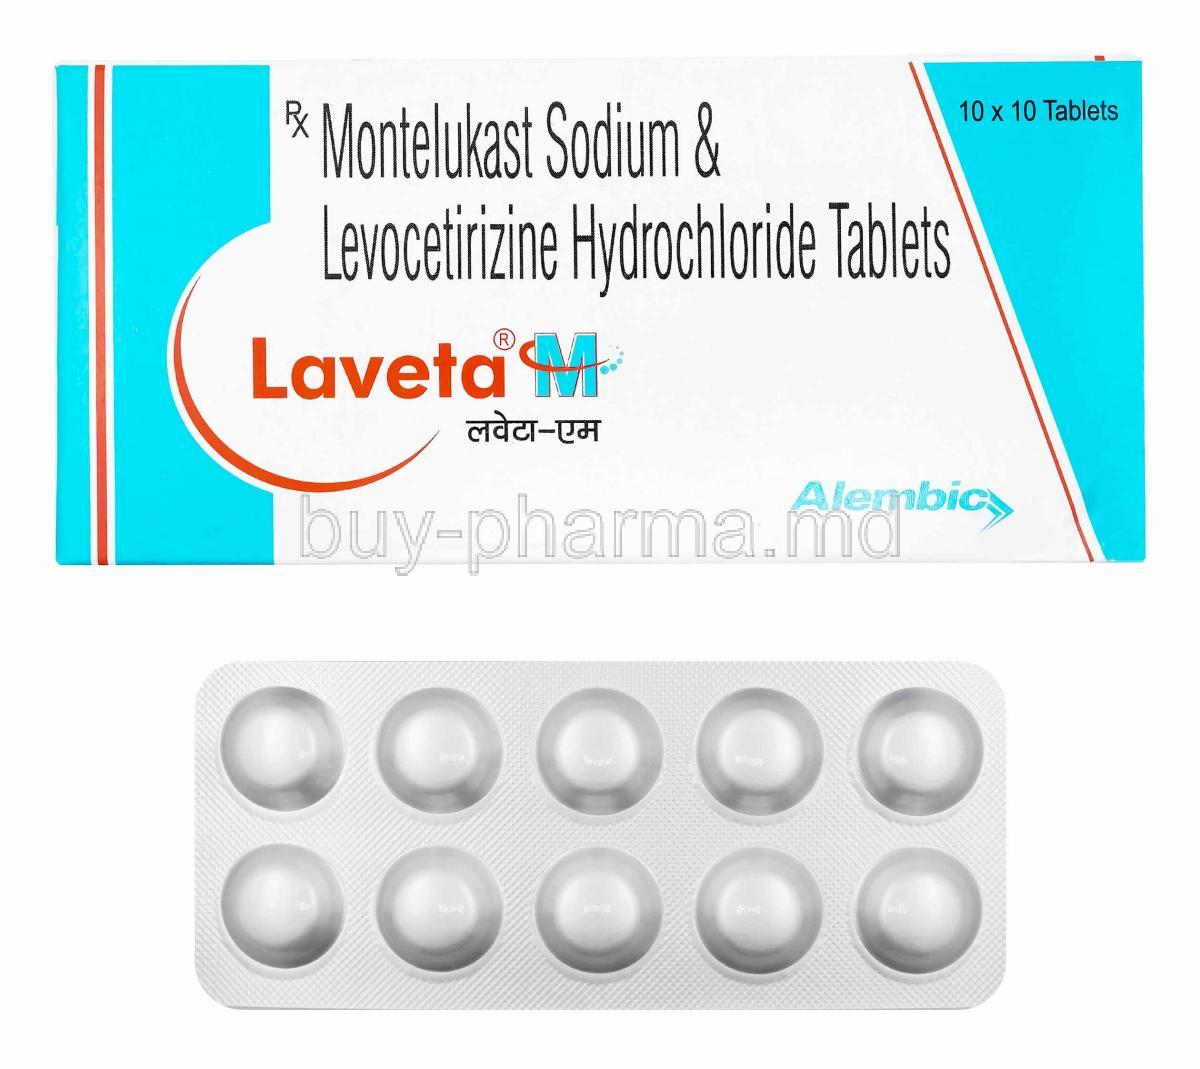 Laveta M, Levocetirizine and Montelukast box and tablets